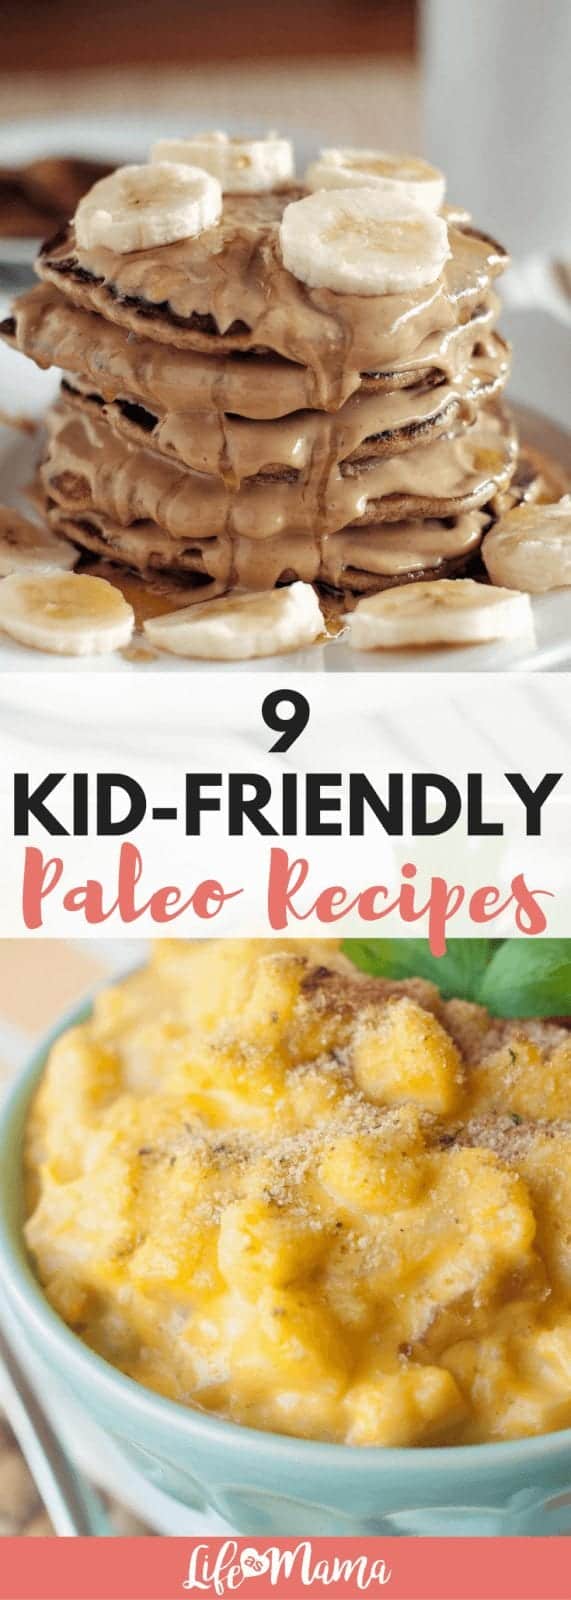 kid-friendly paleo recipes